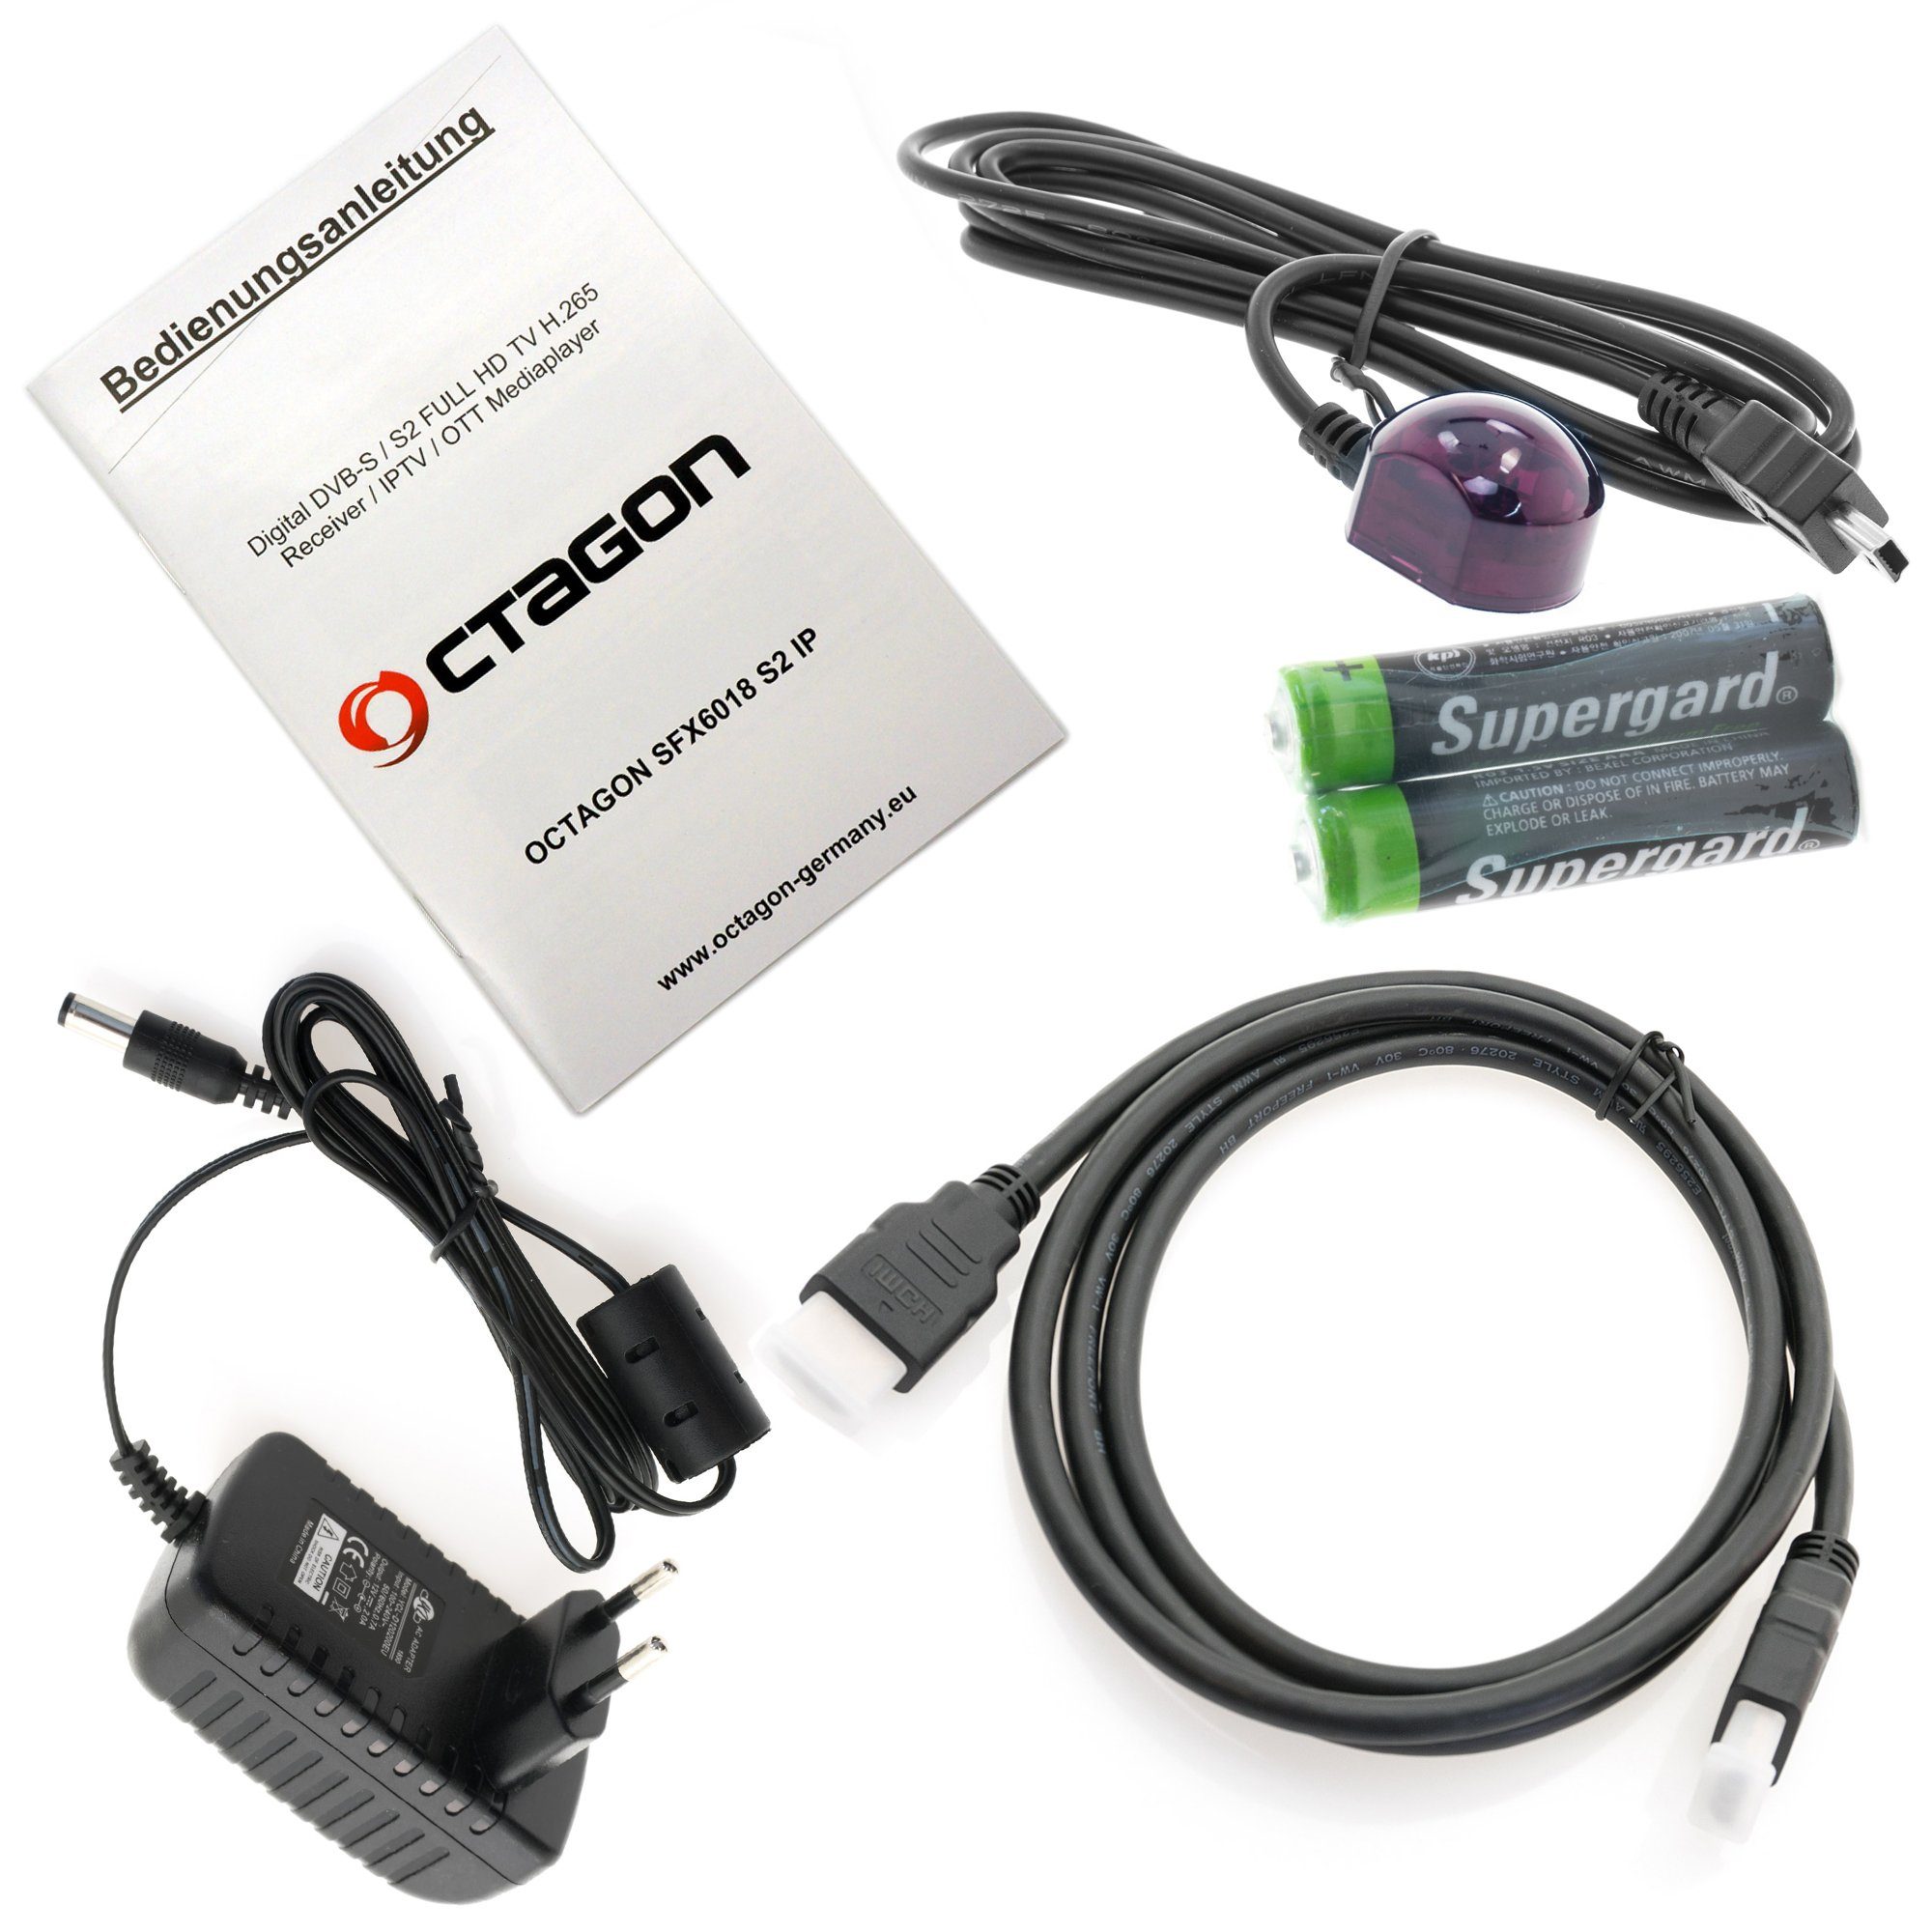 OCTAGON SFX6018 S2+IP - H.265 Smart DVB-S2 Sat E2 Linux 1x SAT-Receiver HD HEVC Receiver